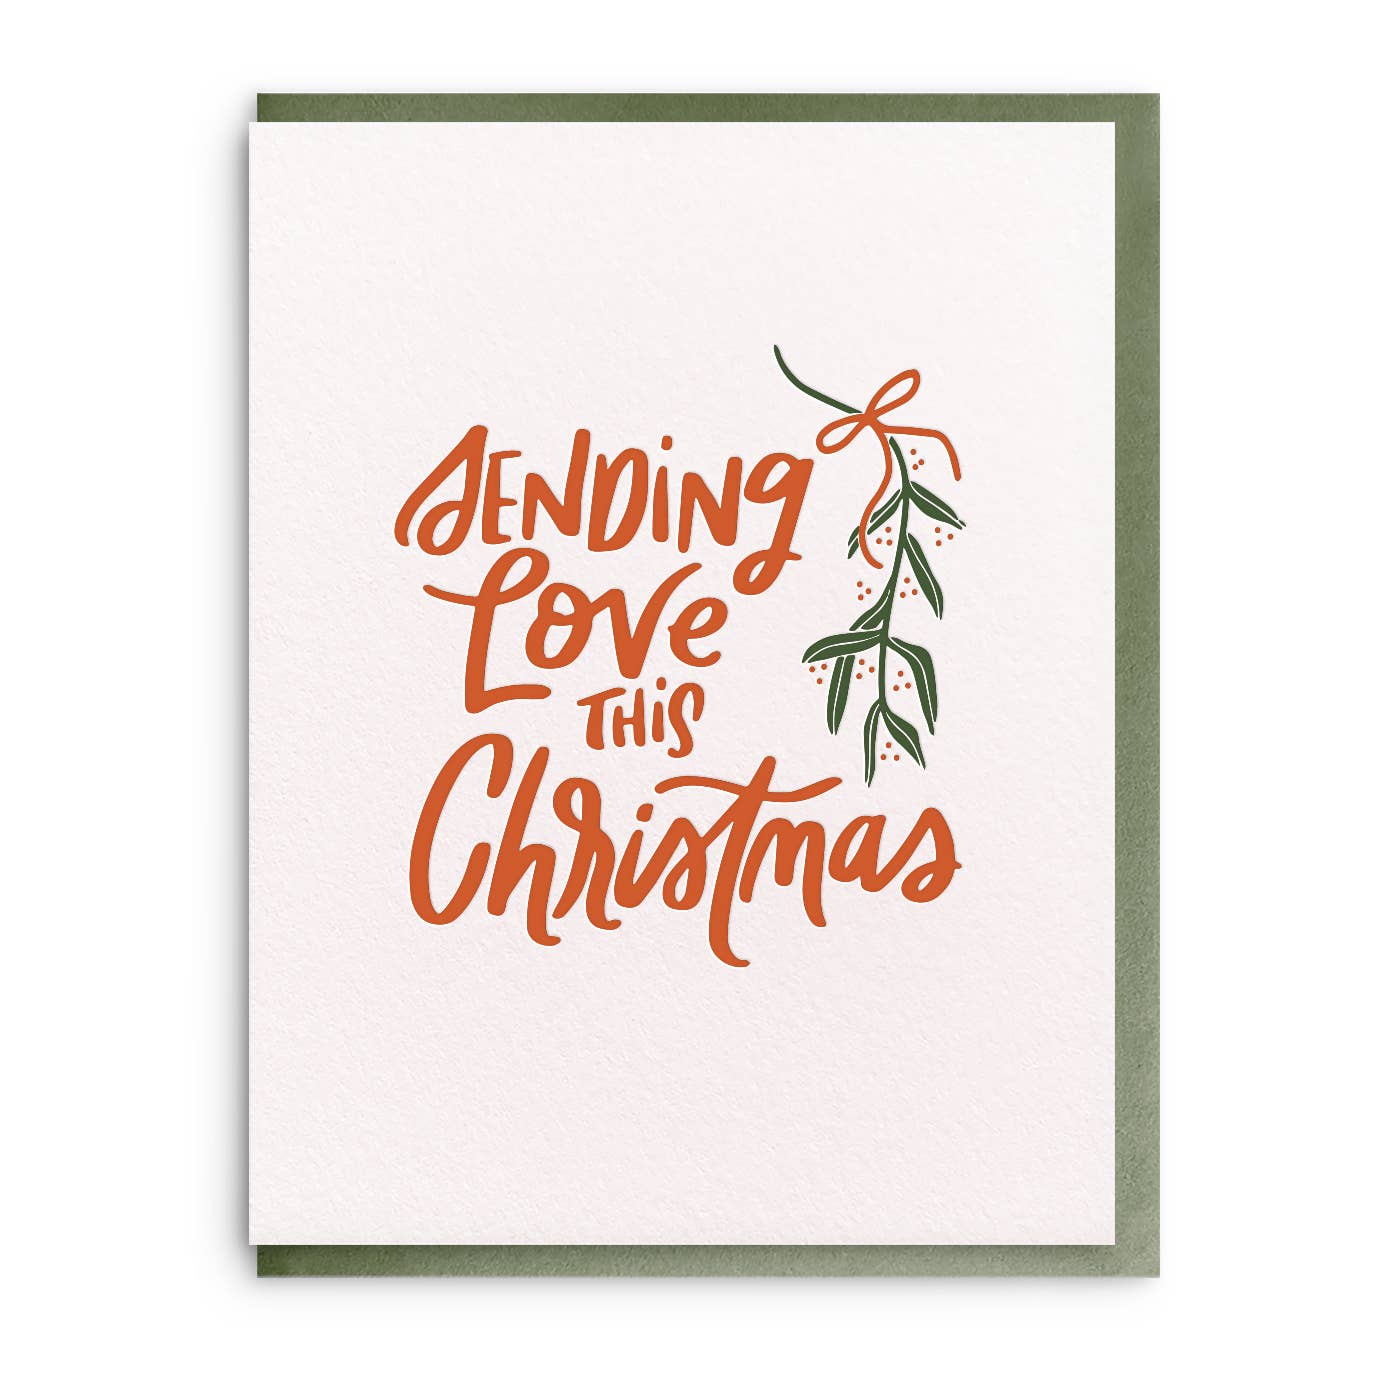 Send Love Xmas - Letterpress Christmas Card